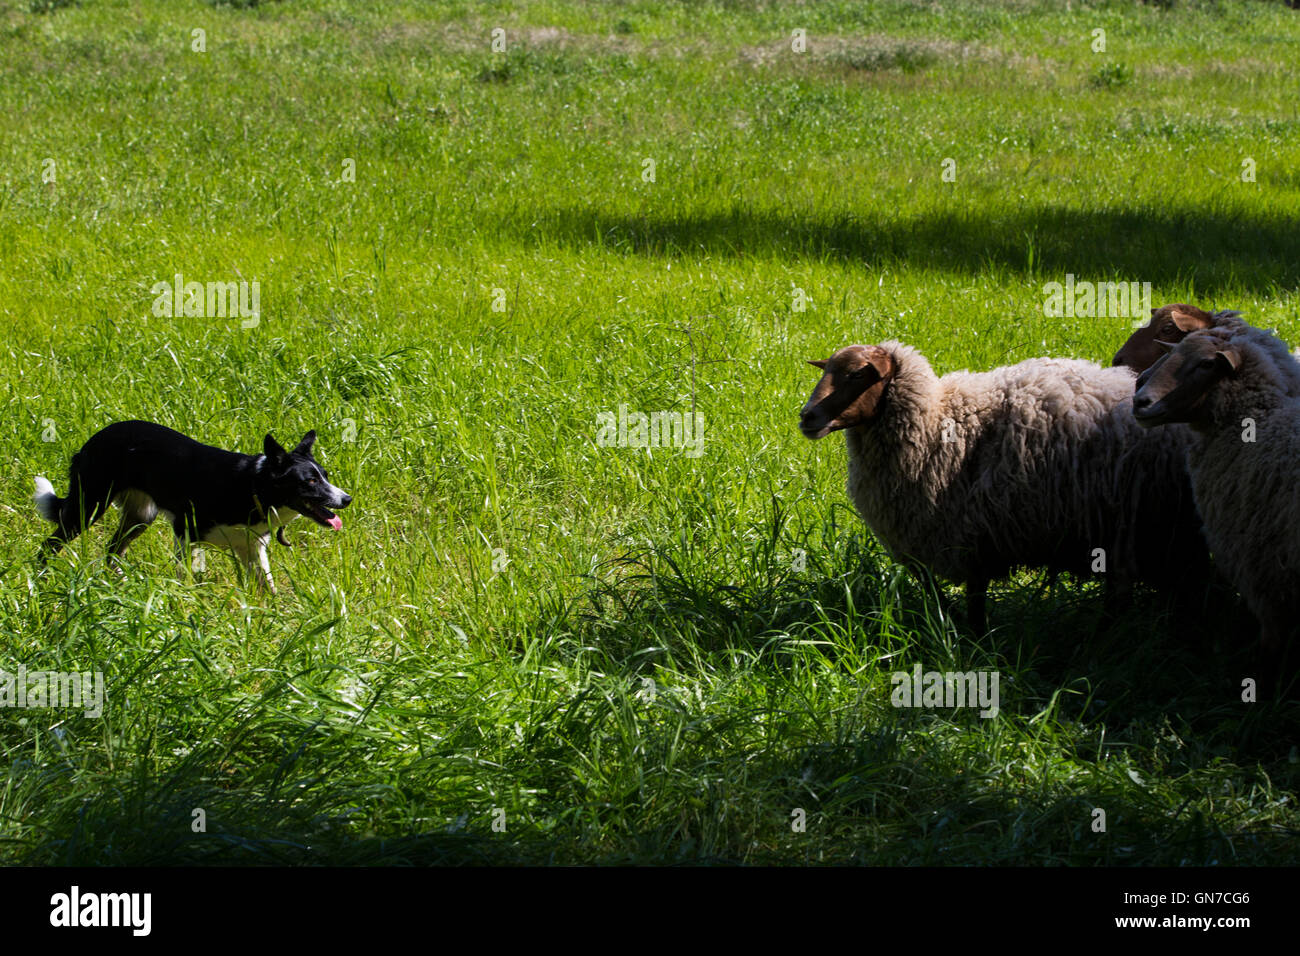 A dog herds sheep, Hidden Villa, Los Altos Hills, California, United States of America Stock Photo